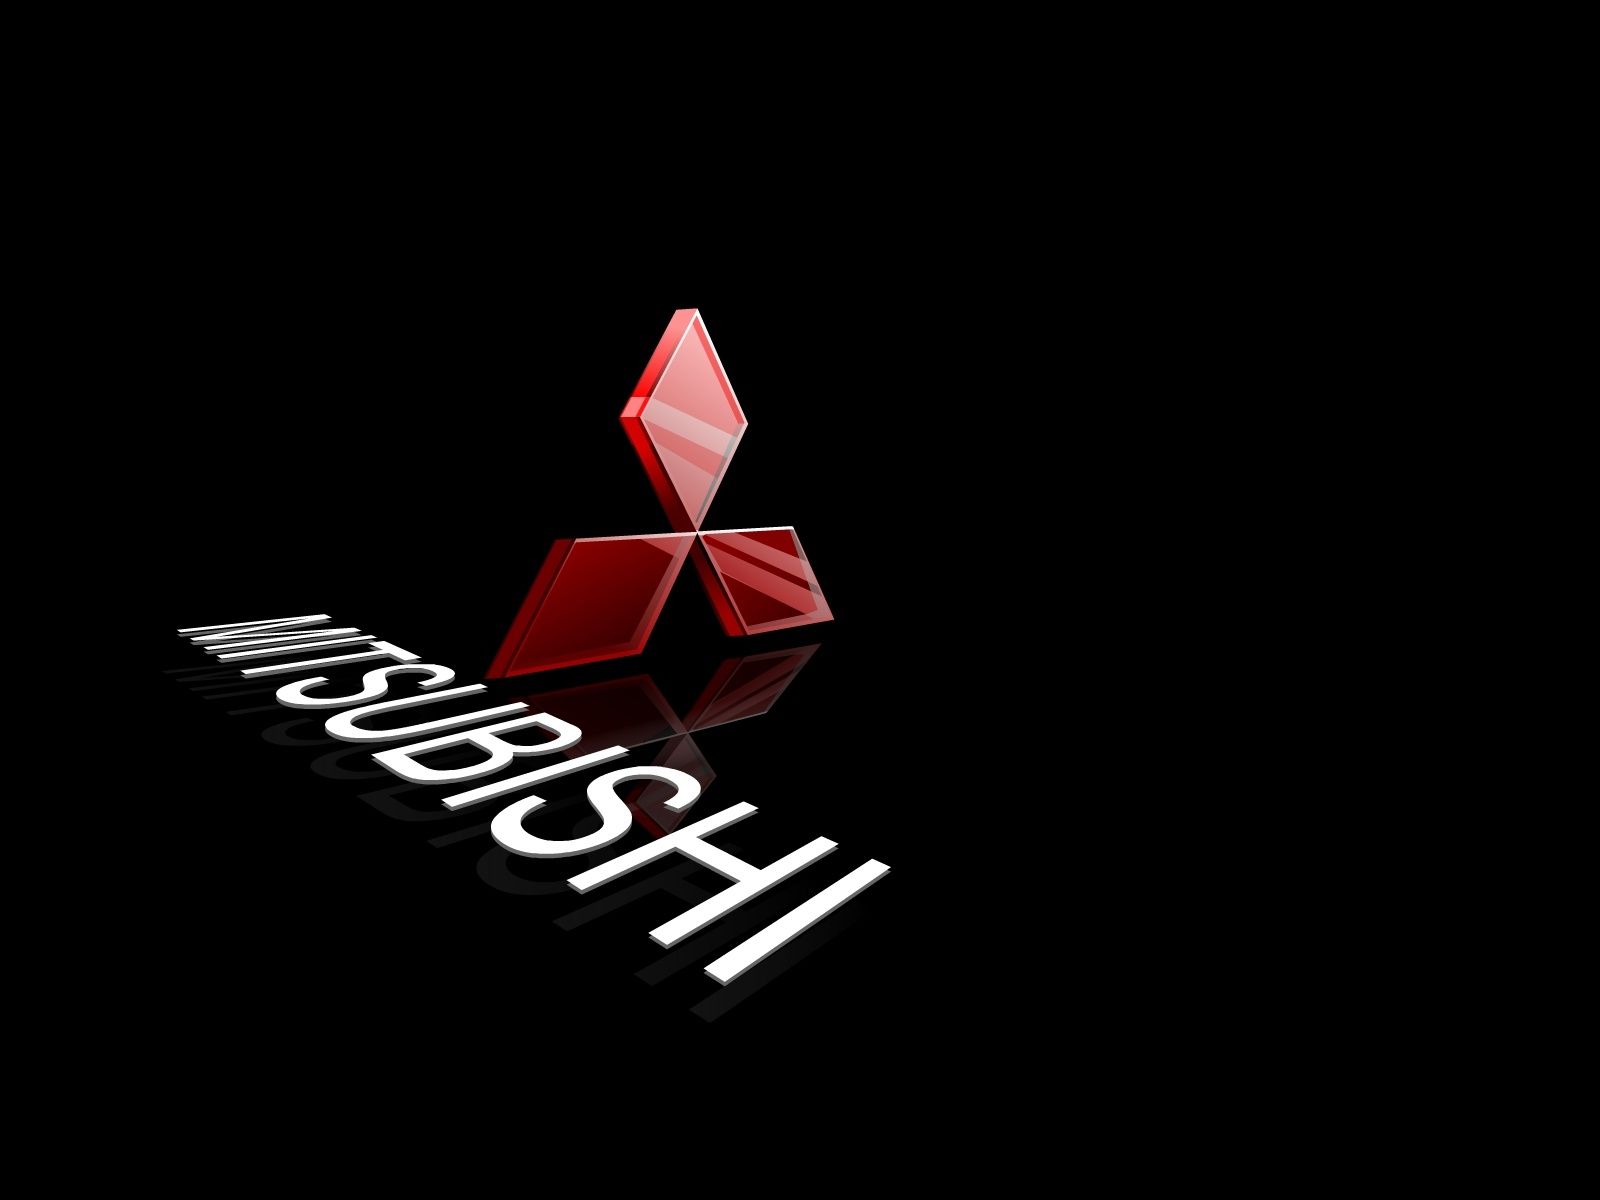 Mitsubishi Logo Wallpapers